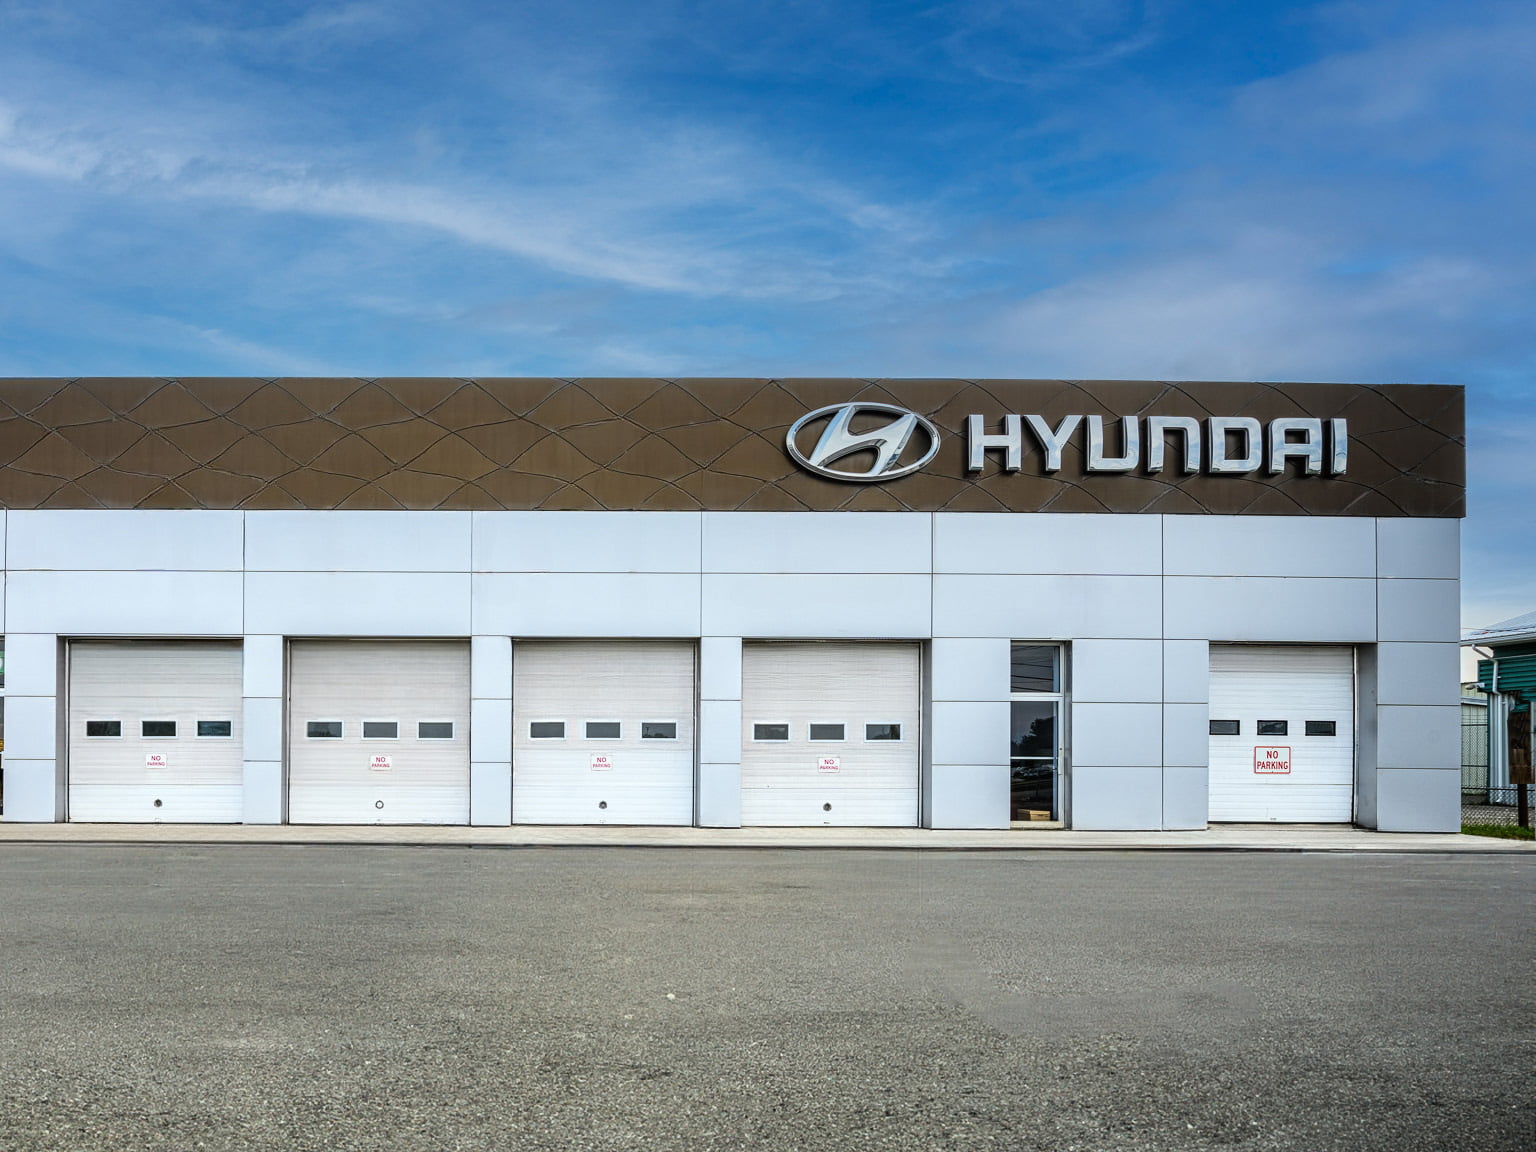 Hyundai Dealership - Timmins view outside